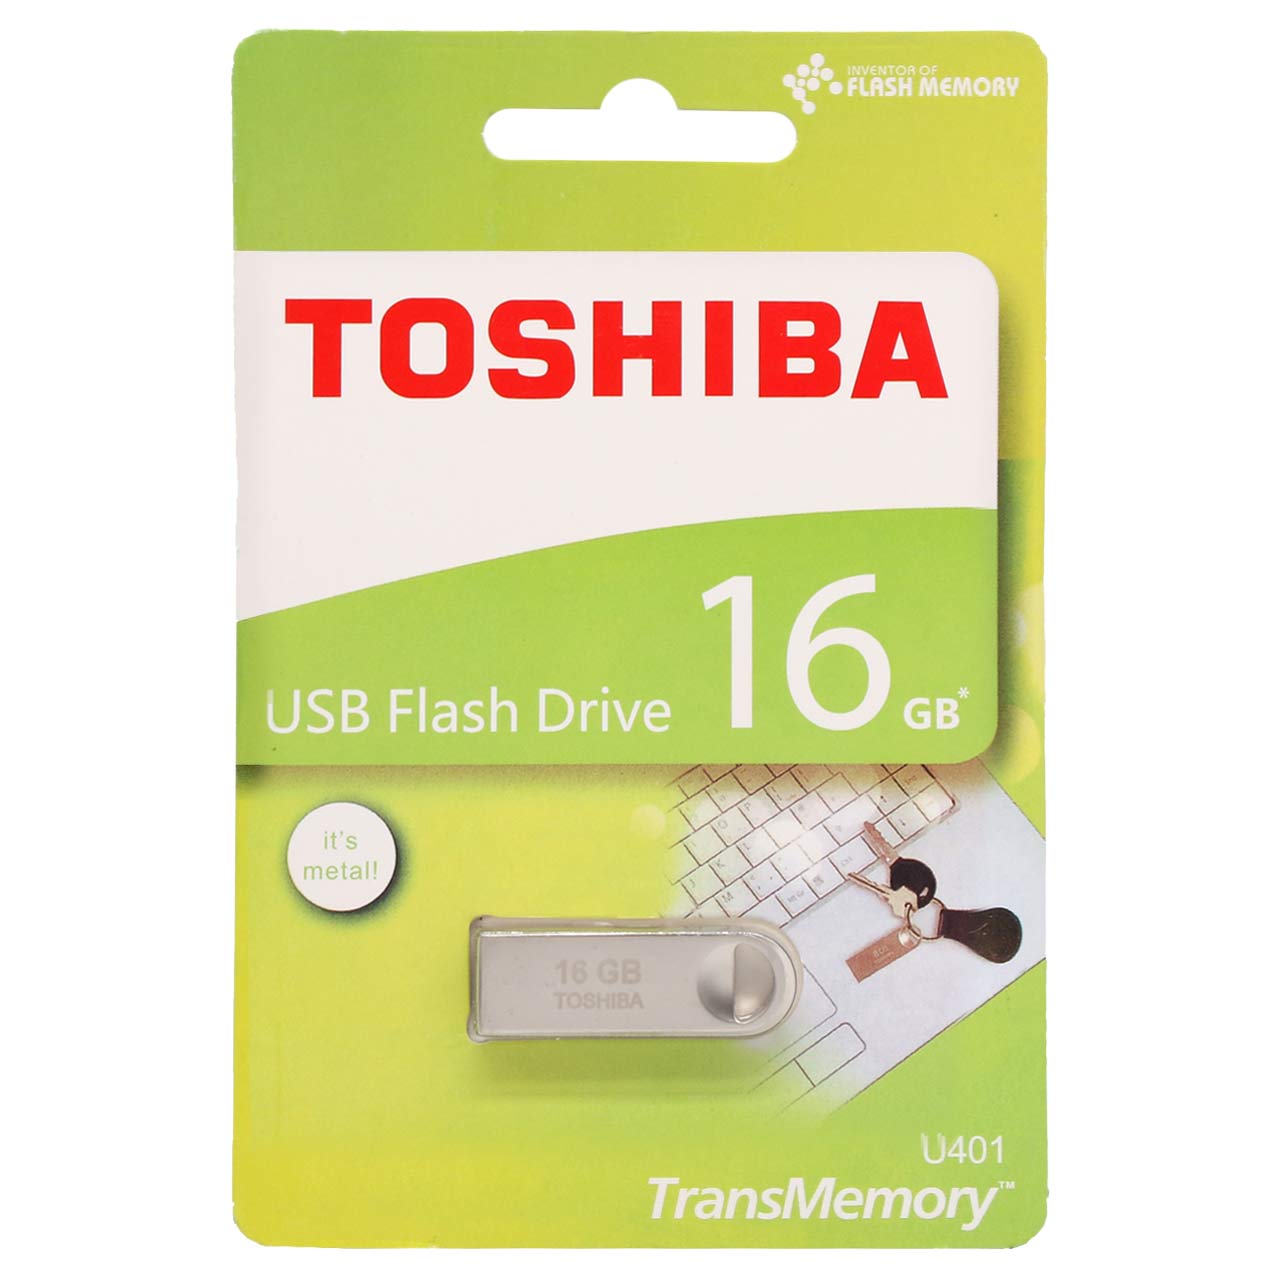 Toshiba TransMemory U401 USB2.0 Flash Memory - 16GB نقره ای (گارانتی مادام‌العمر استار مموری)